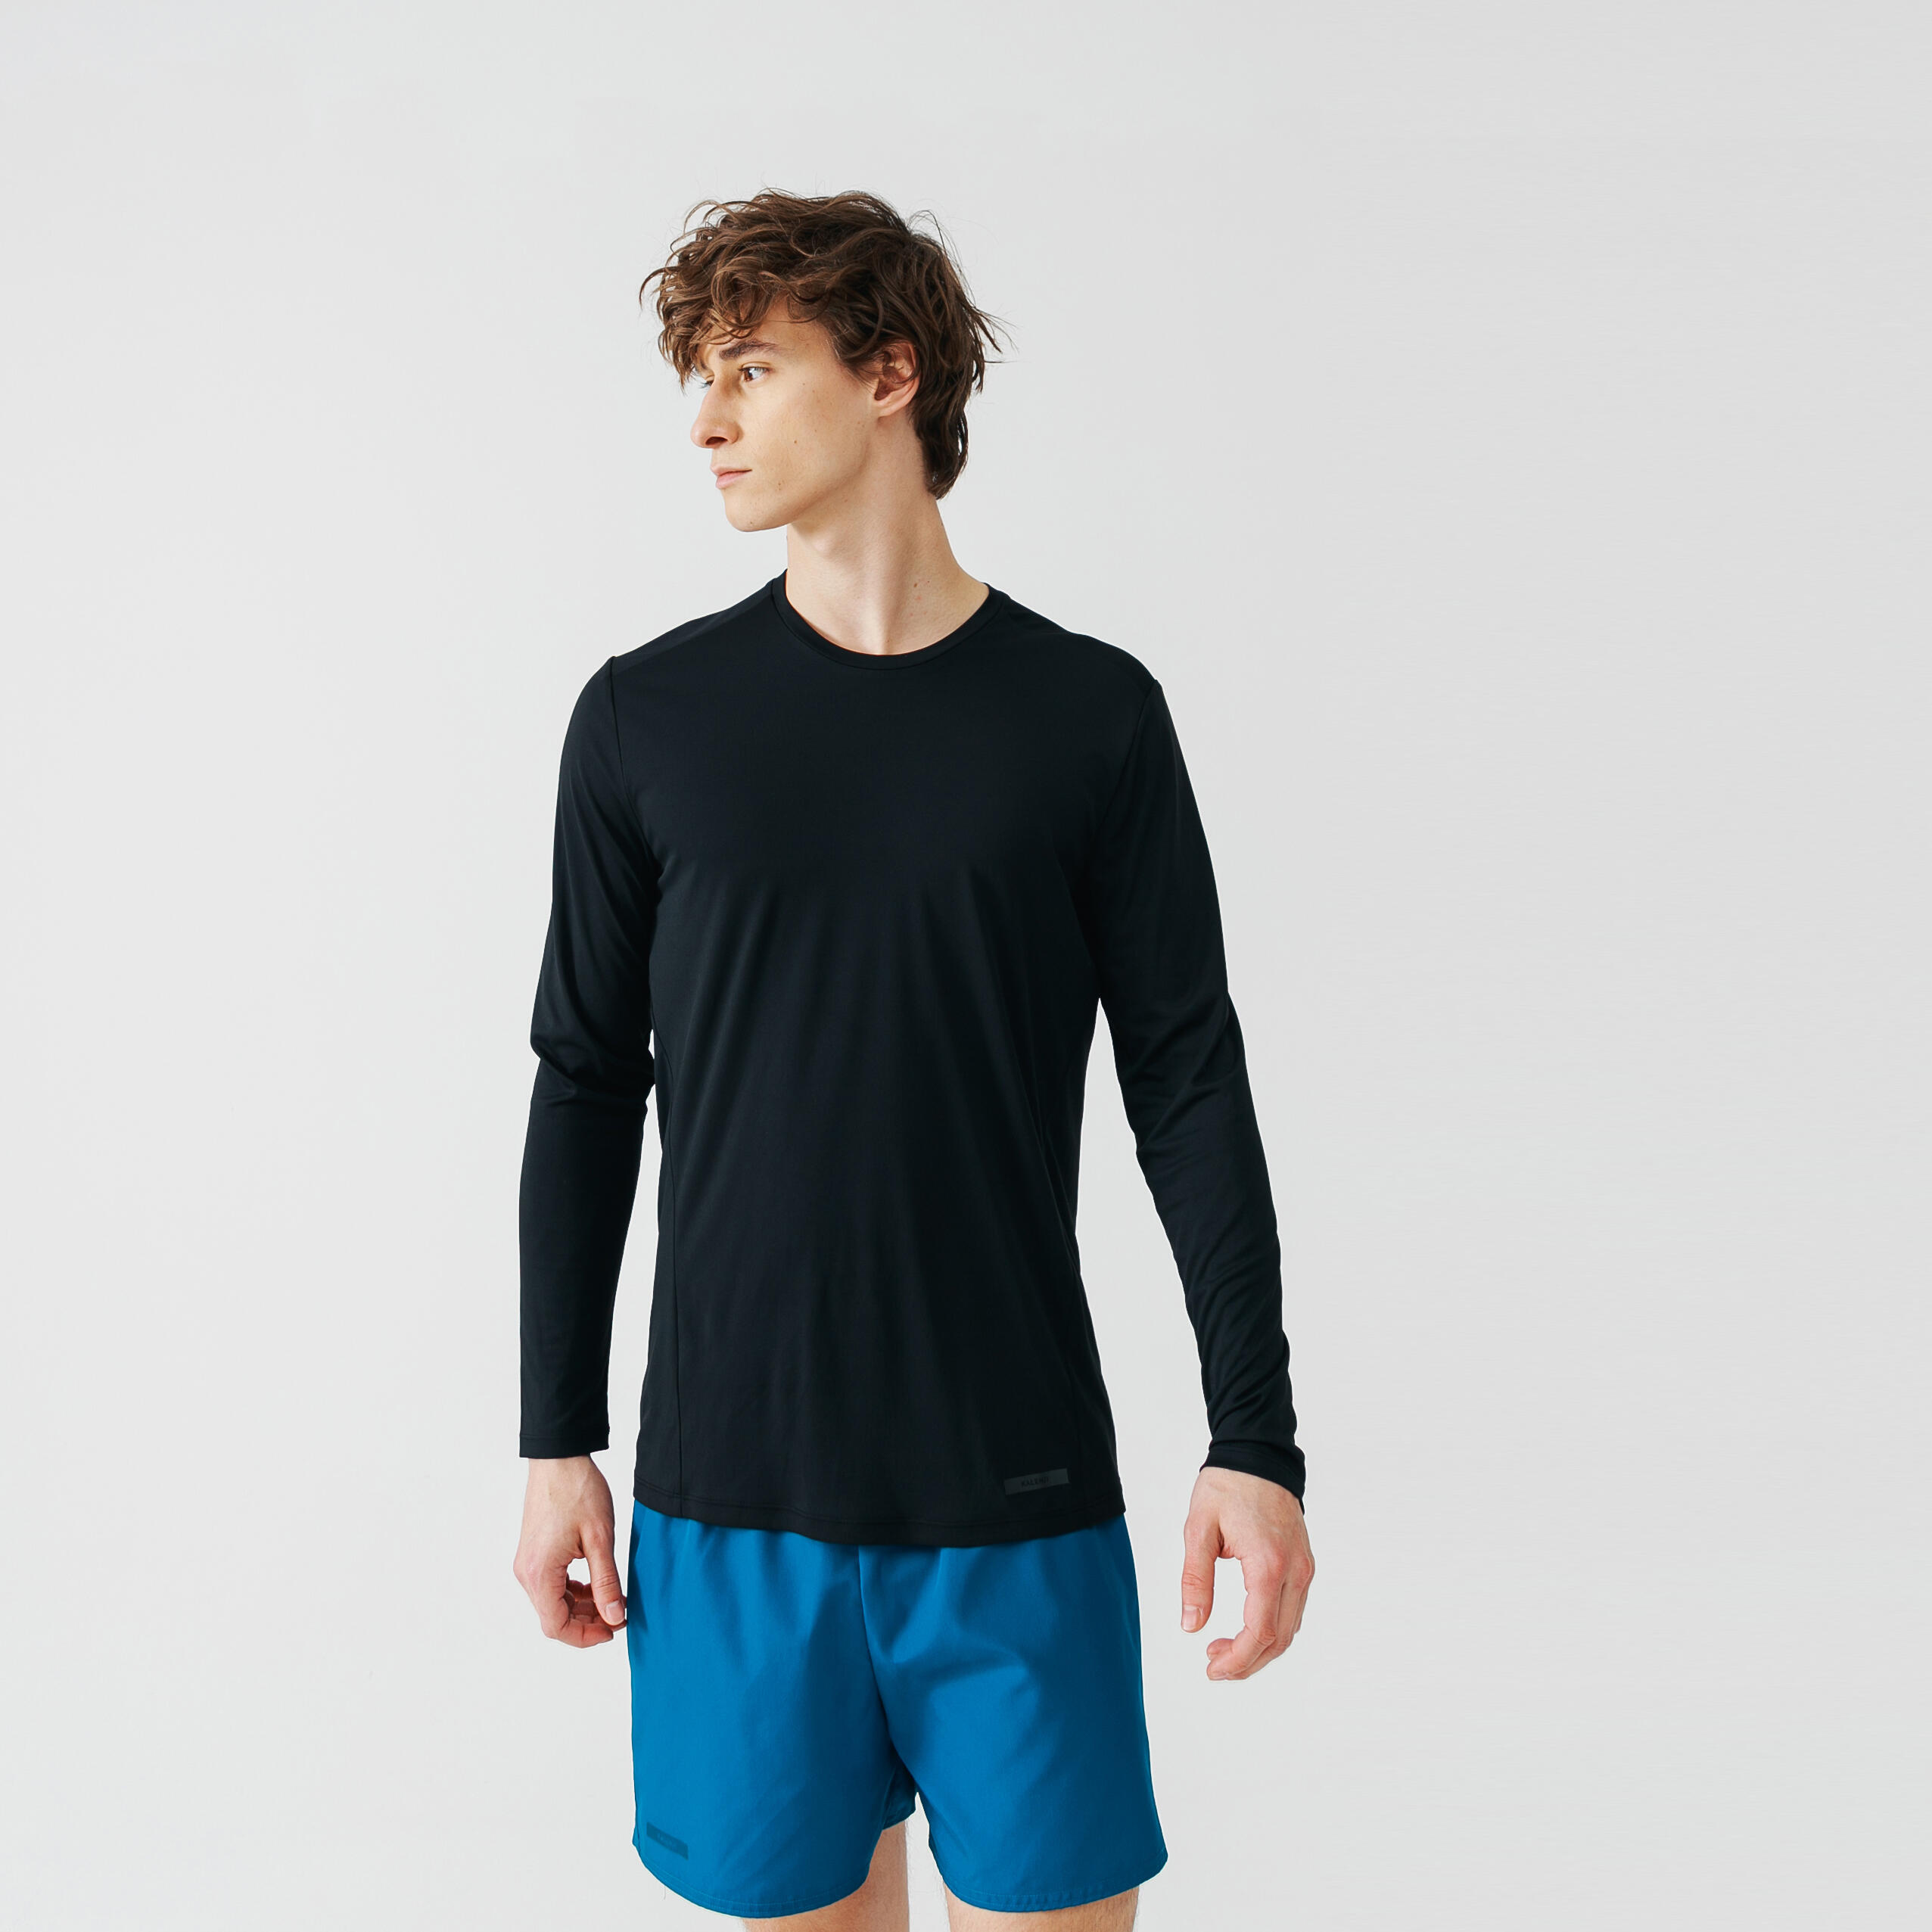 KALENJI T-Shirt Running Manches Longues Respirant Homme - Sun Protect Noir